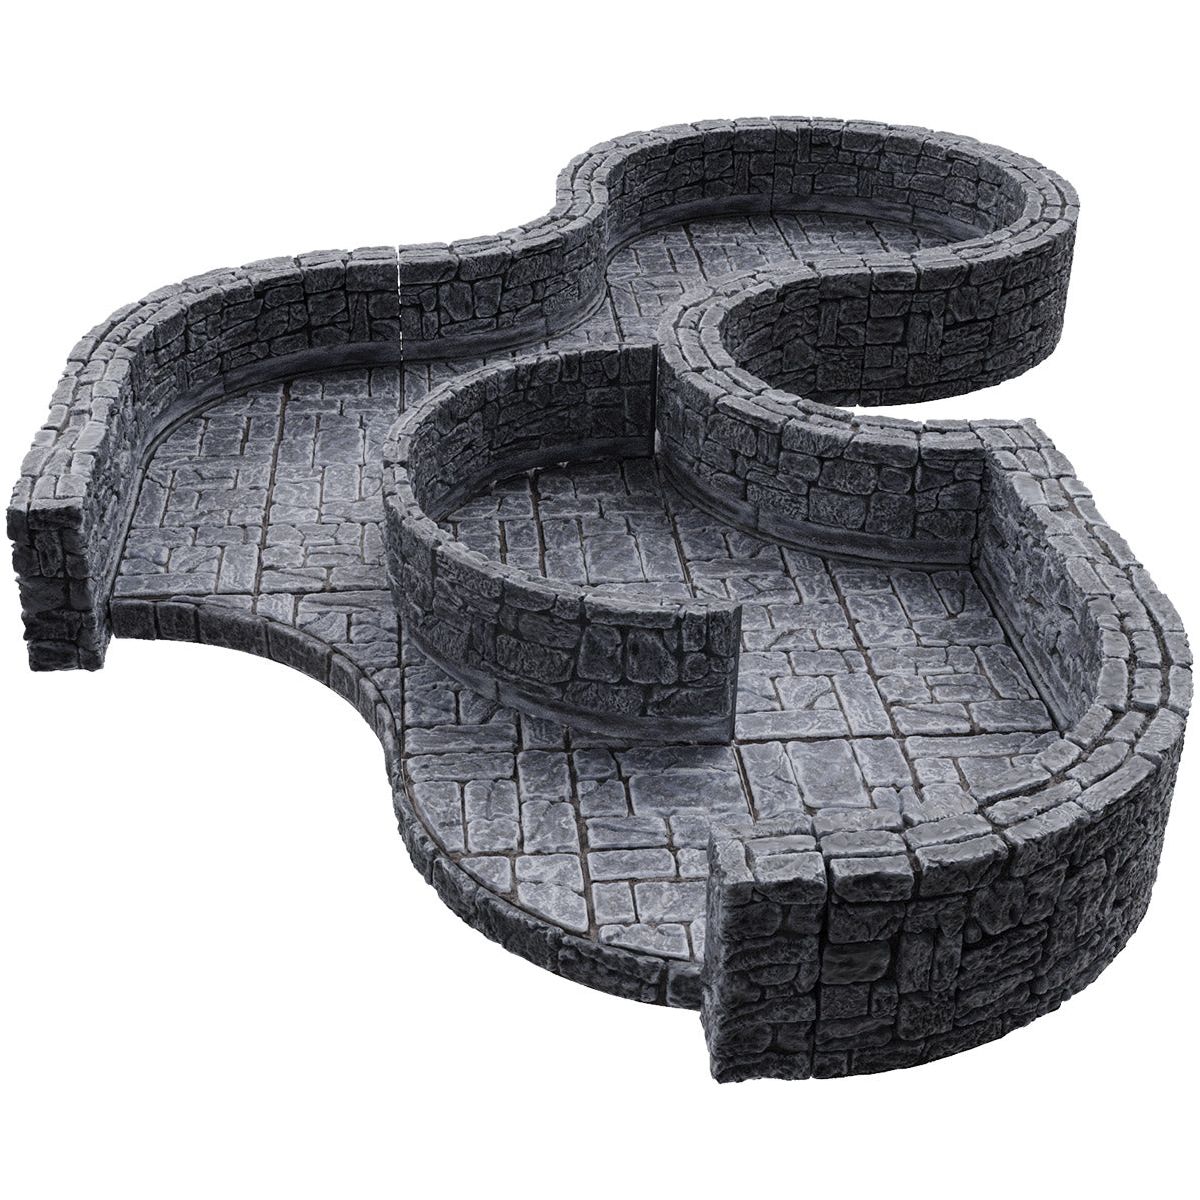 D&D - Warlock Tiles III - Curves